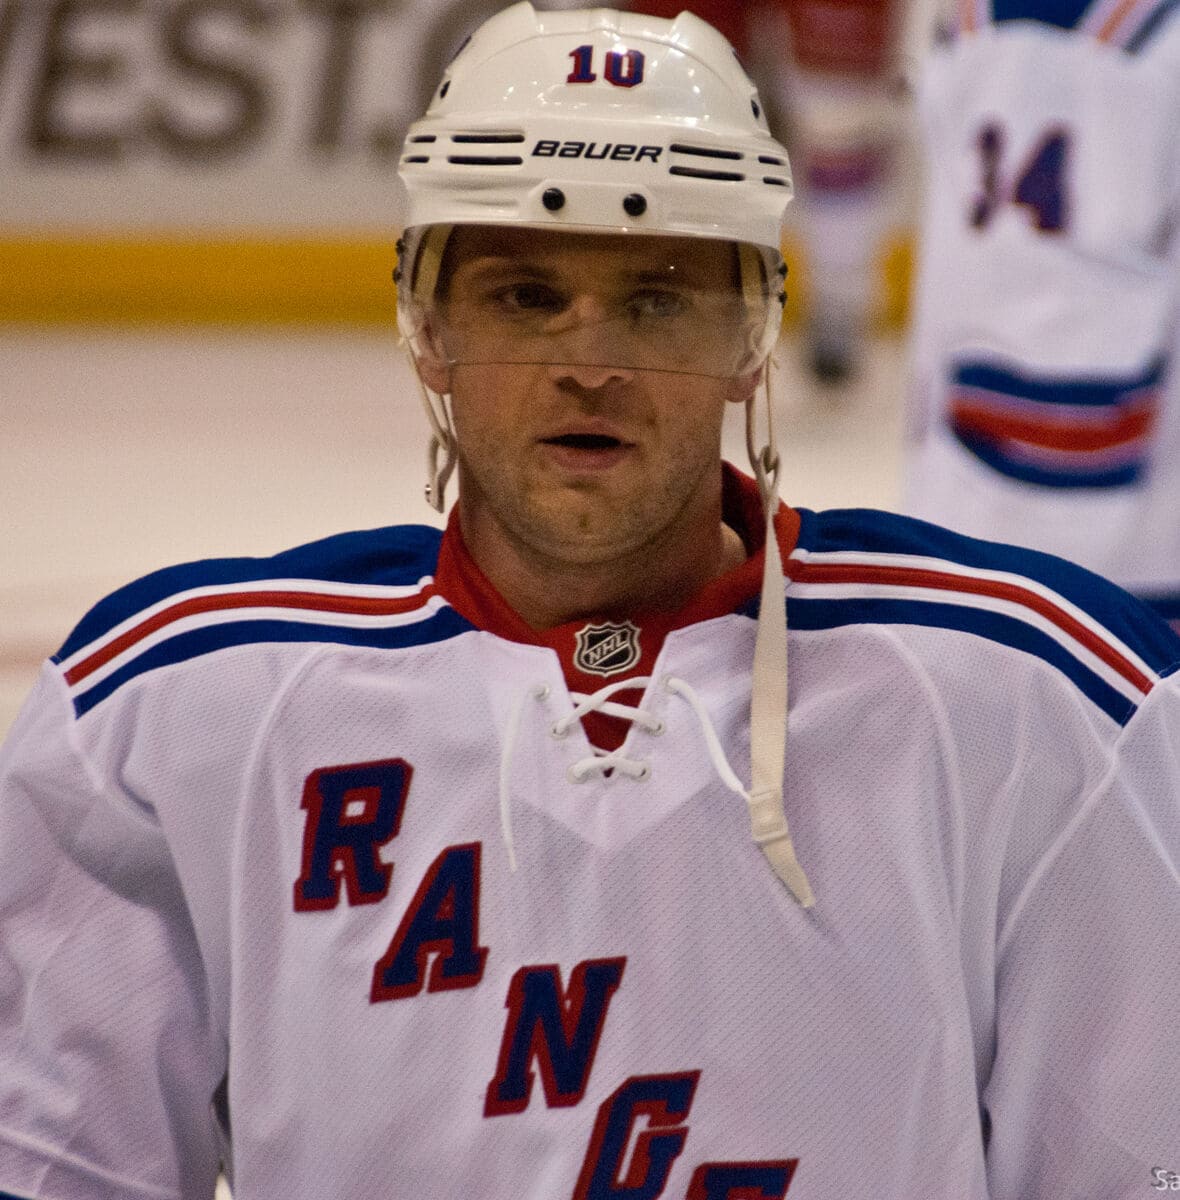 Marián Gáborík net worth in Hockey category